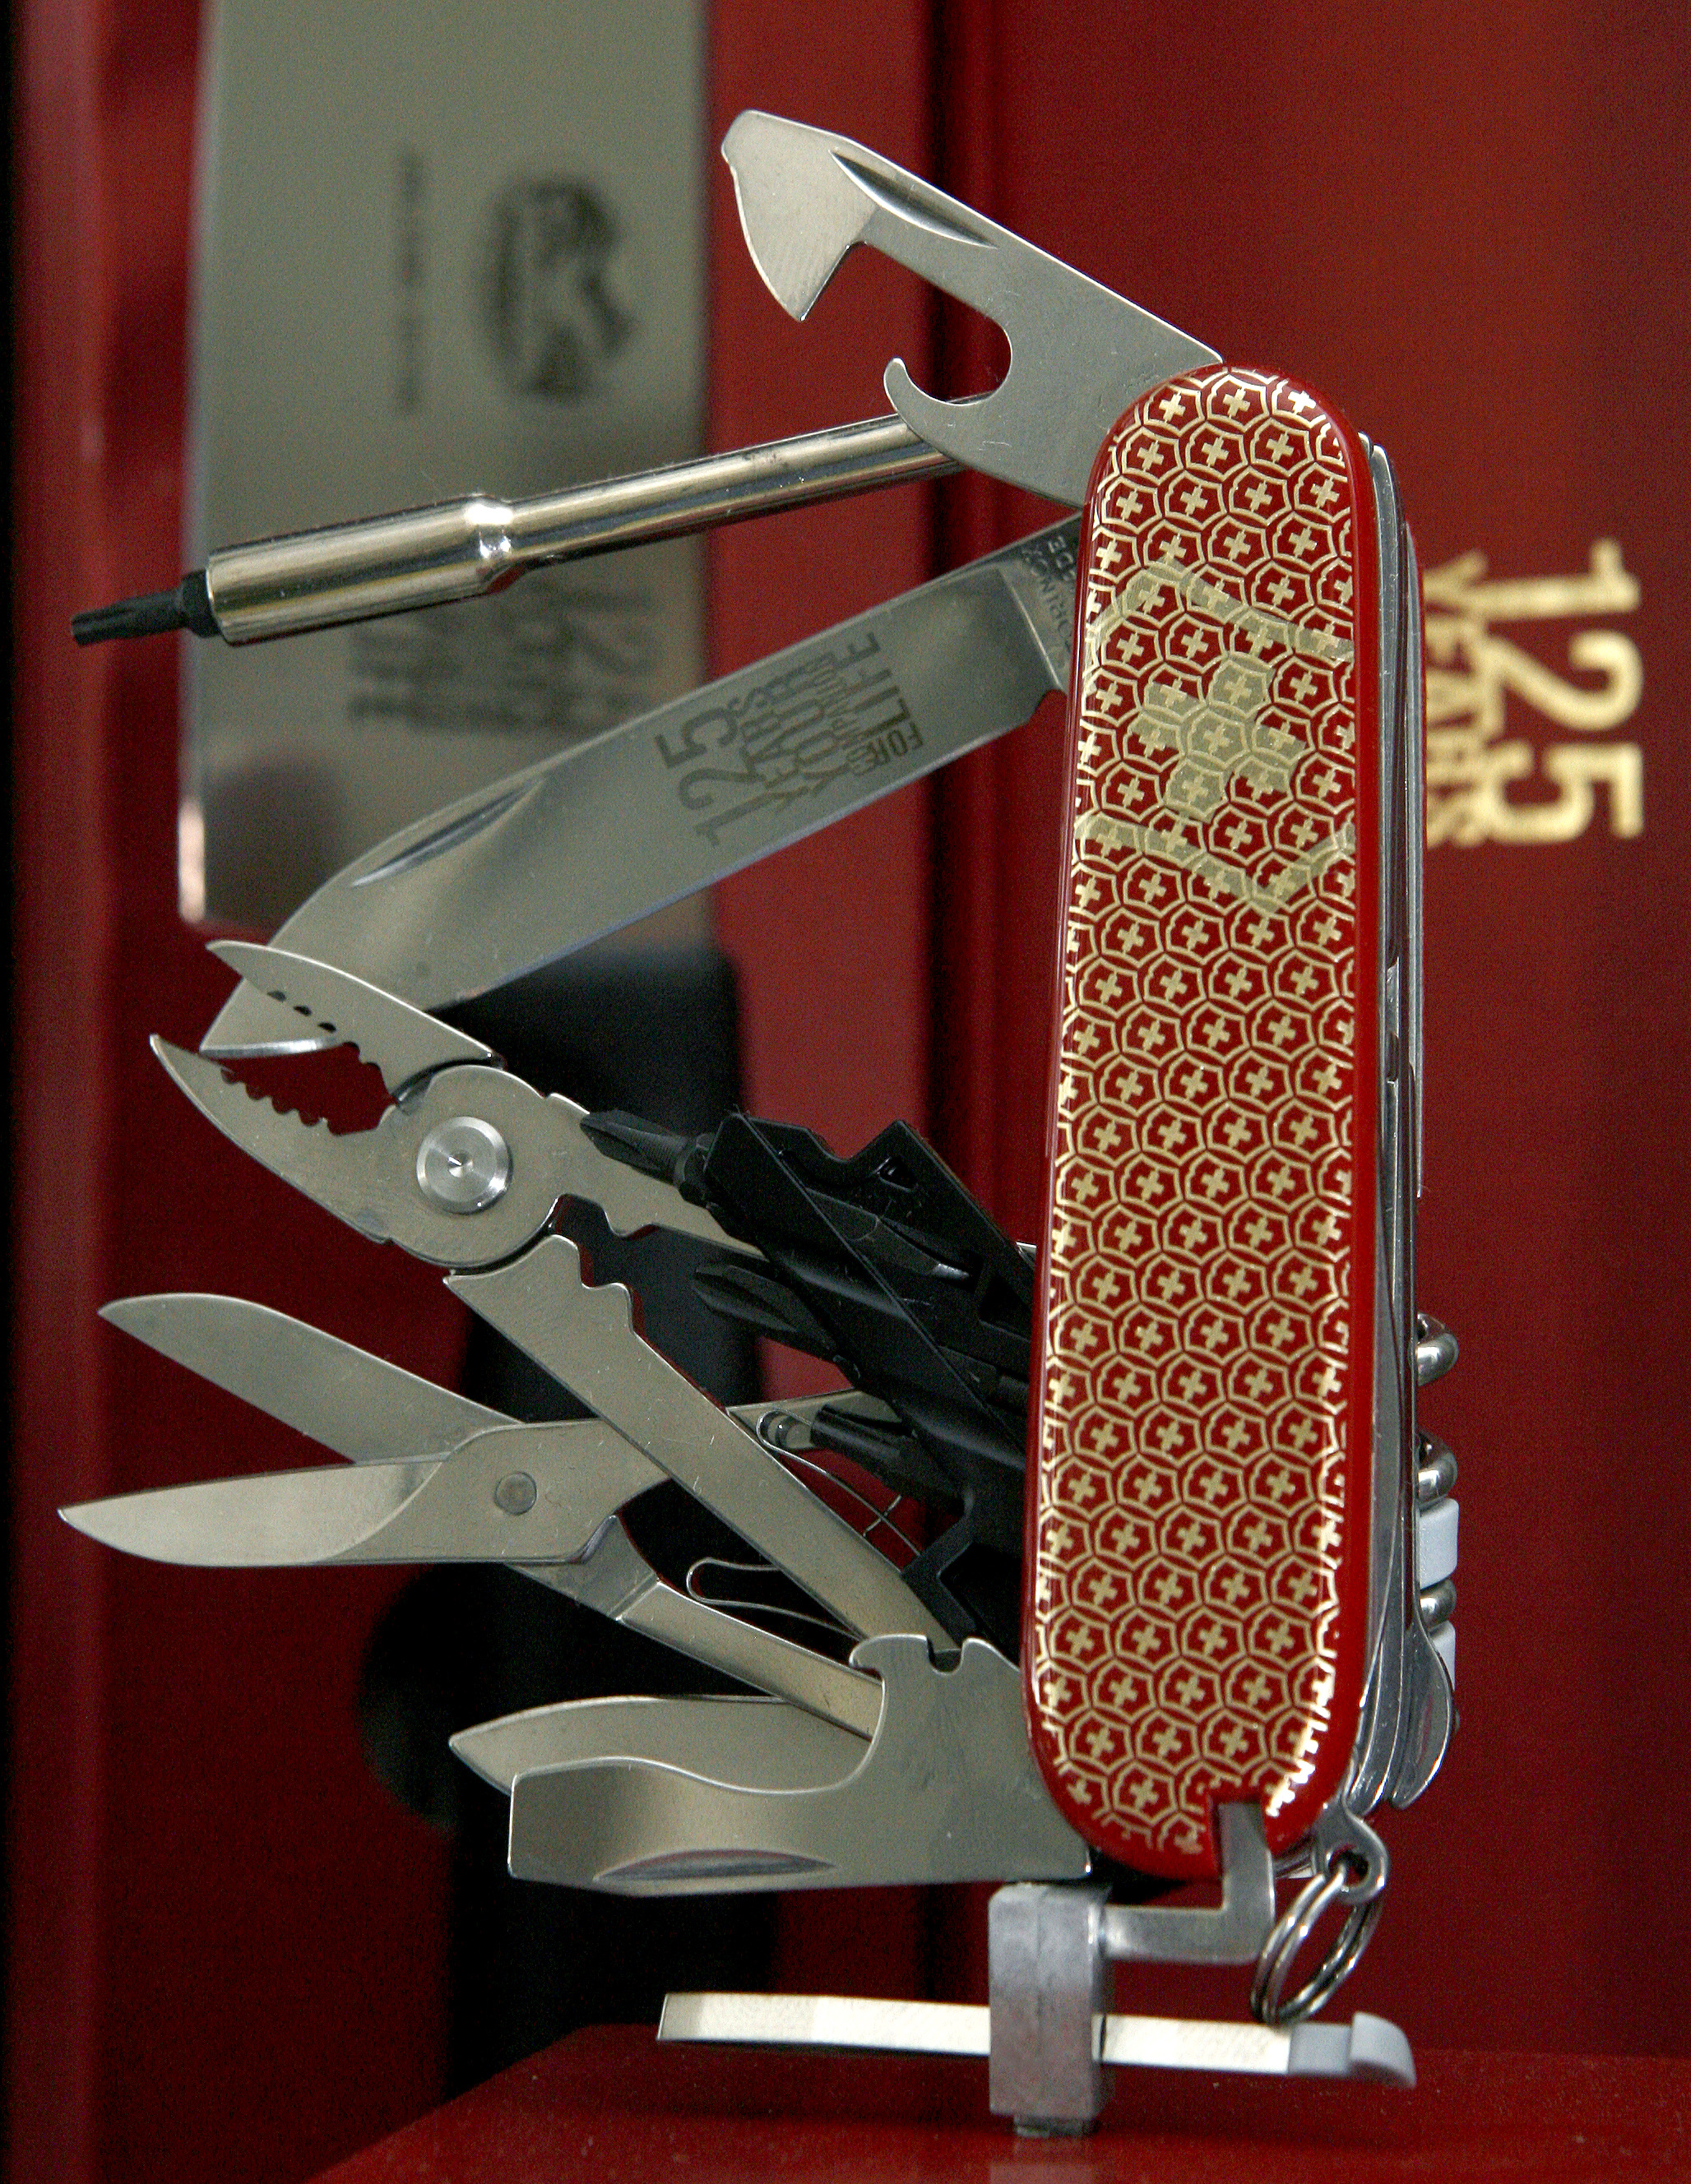 Swiss knife manufacturered by Victorinox. ©REUTERS/Arnd Wiegmann